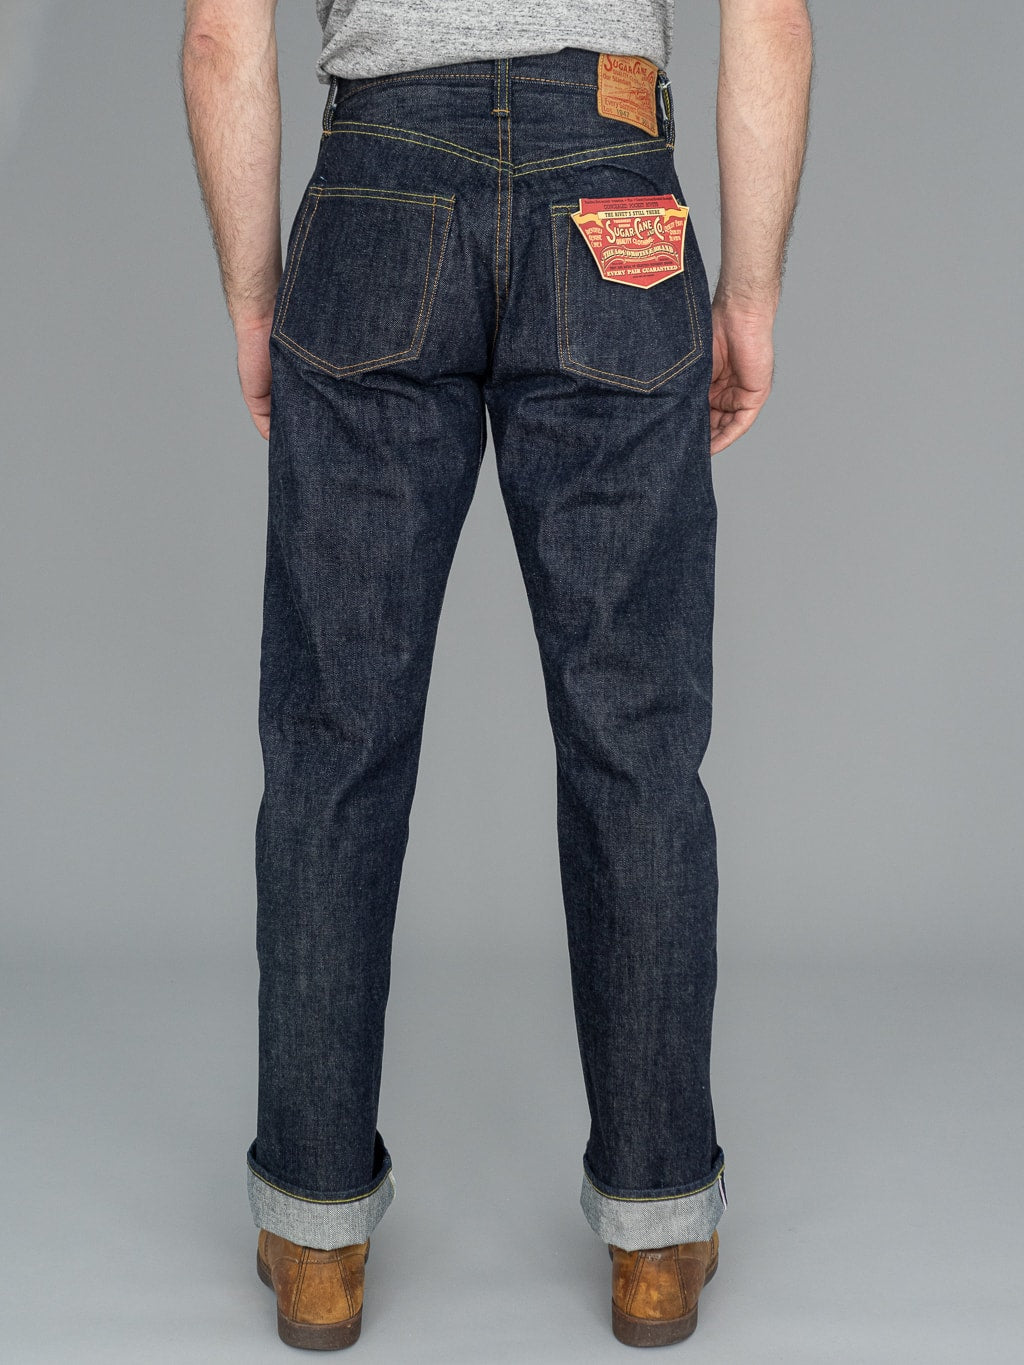 sugar cane SC41947 14.25oz denim 1947 model regular straight jeans back